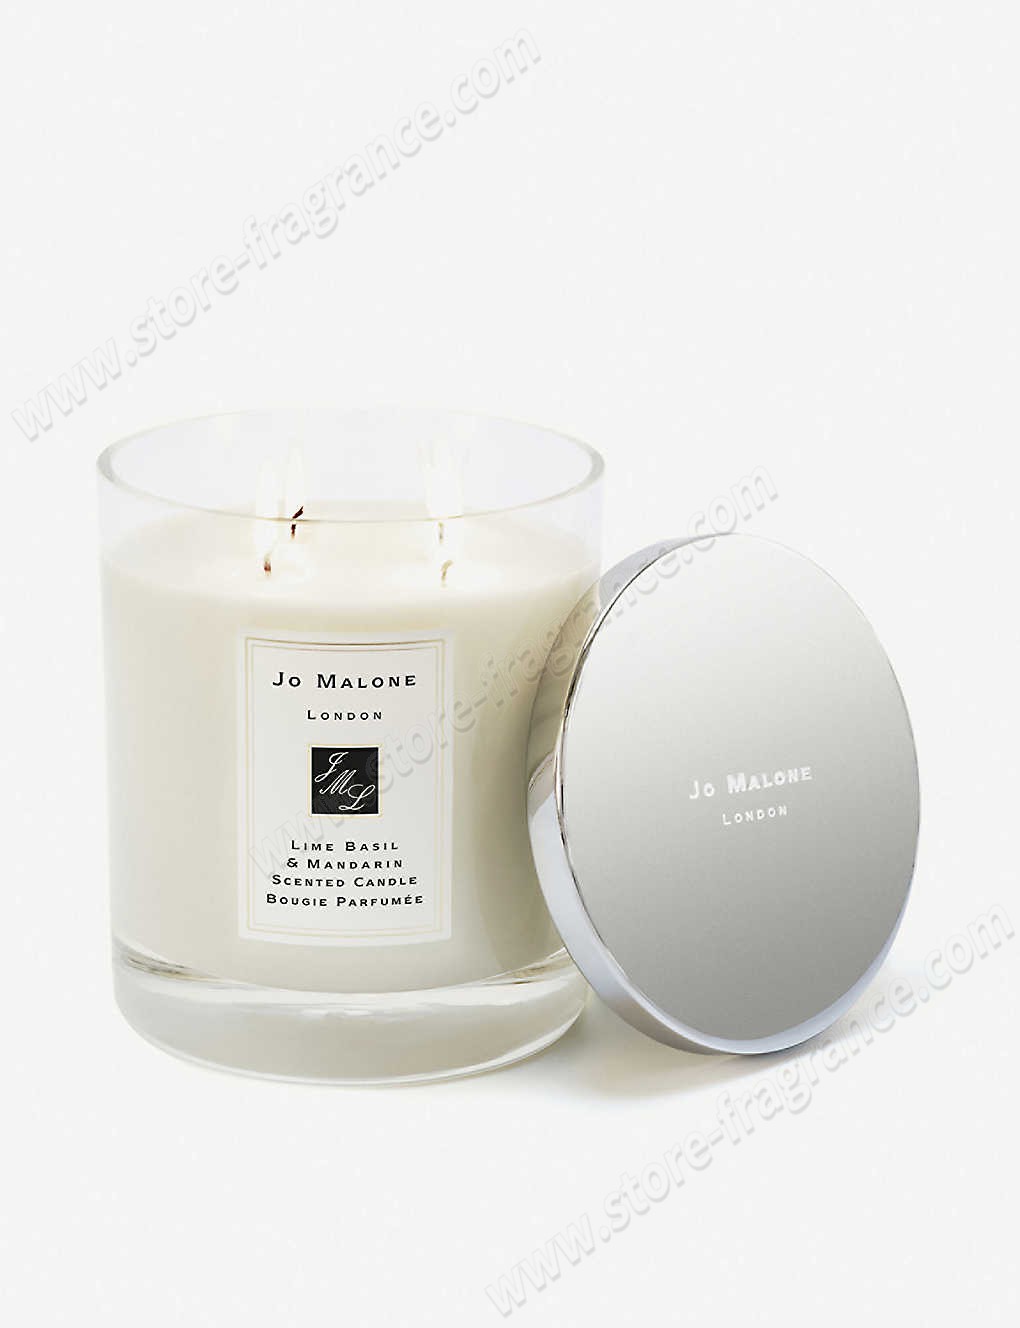 JO MALONE LONDON/Lime Basil & Mandarin luxury candle 2.5kg ✿ Discount Store - -0